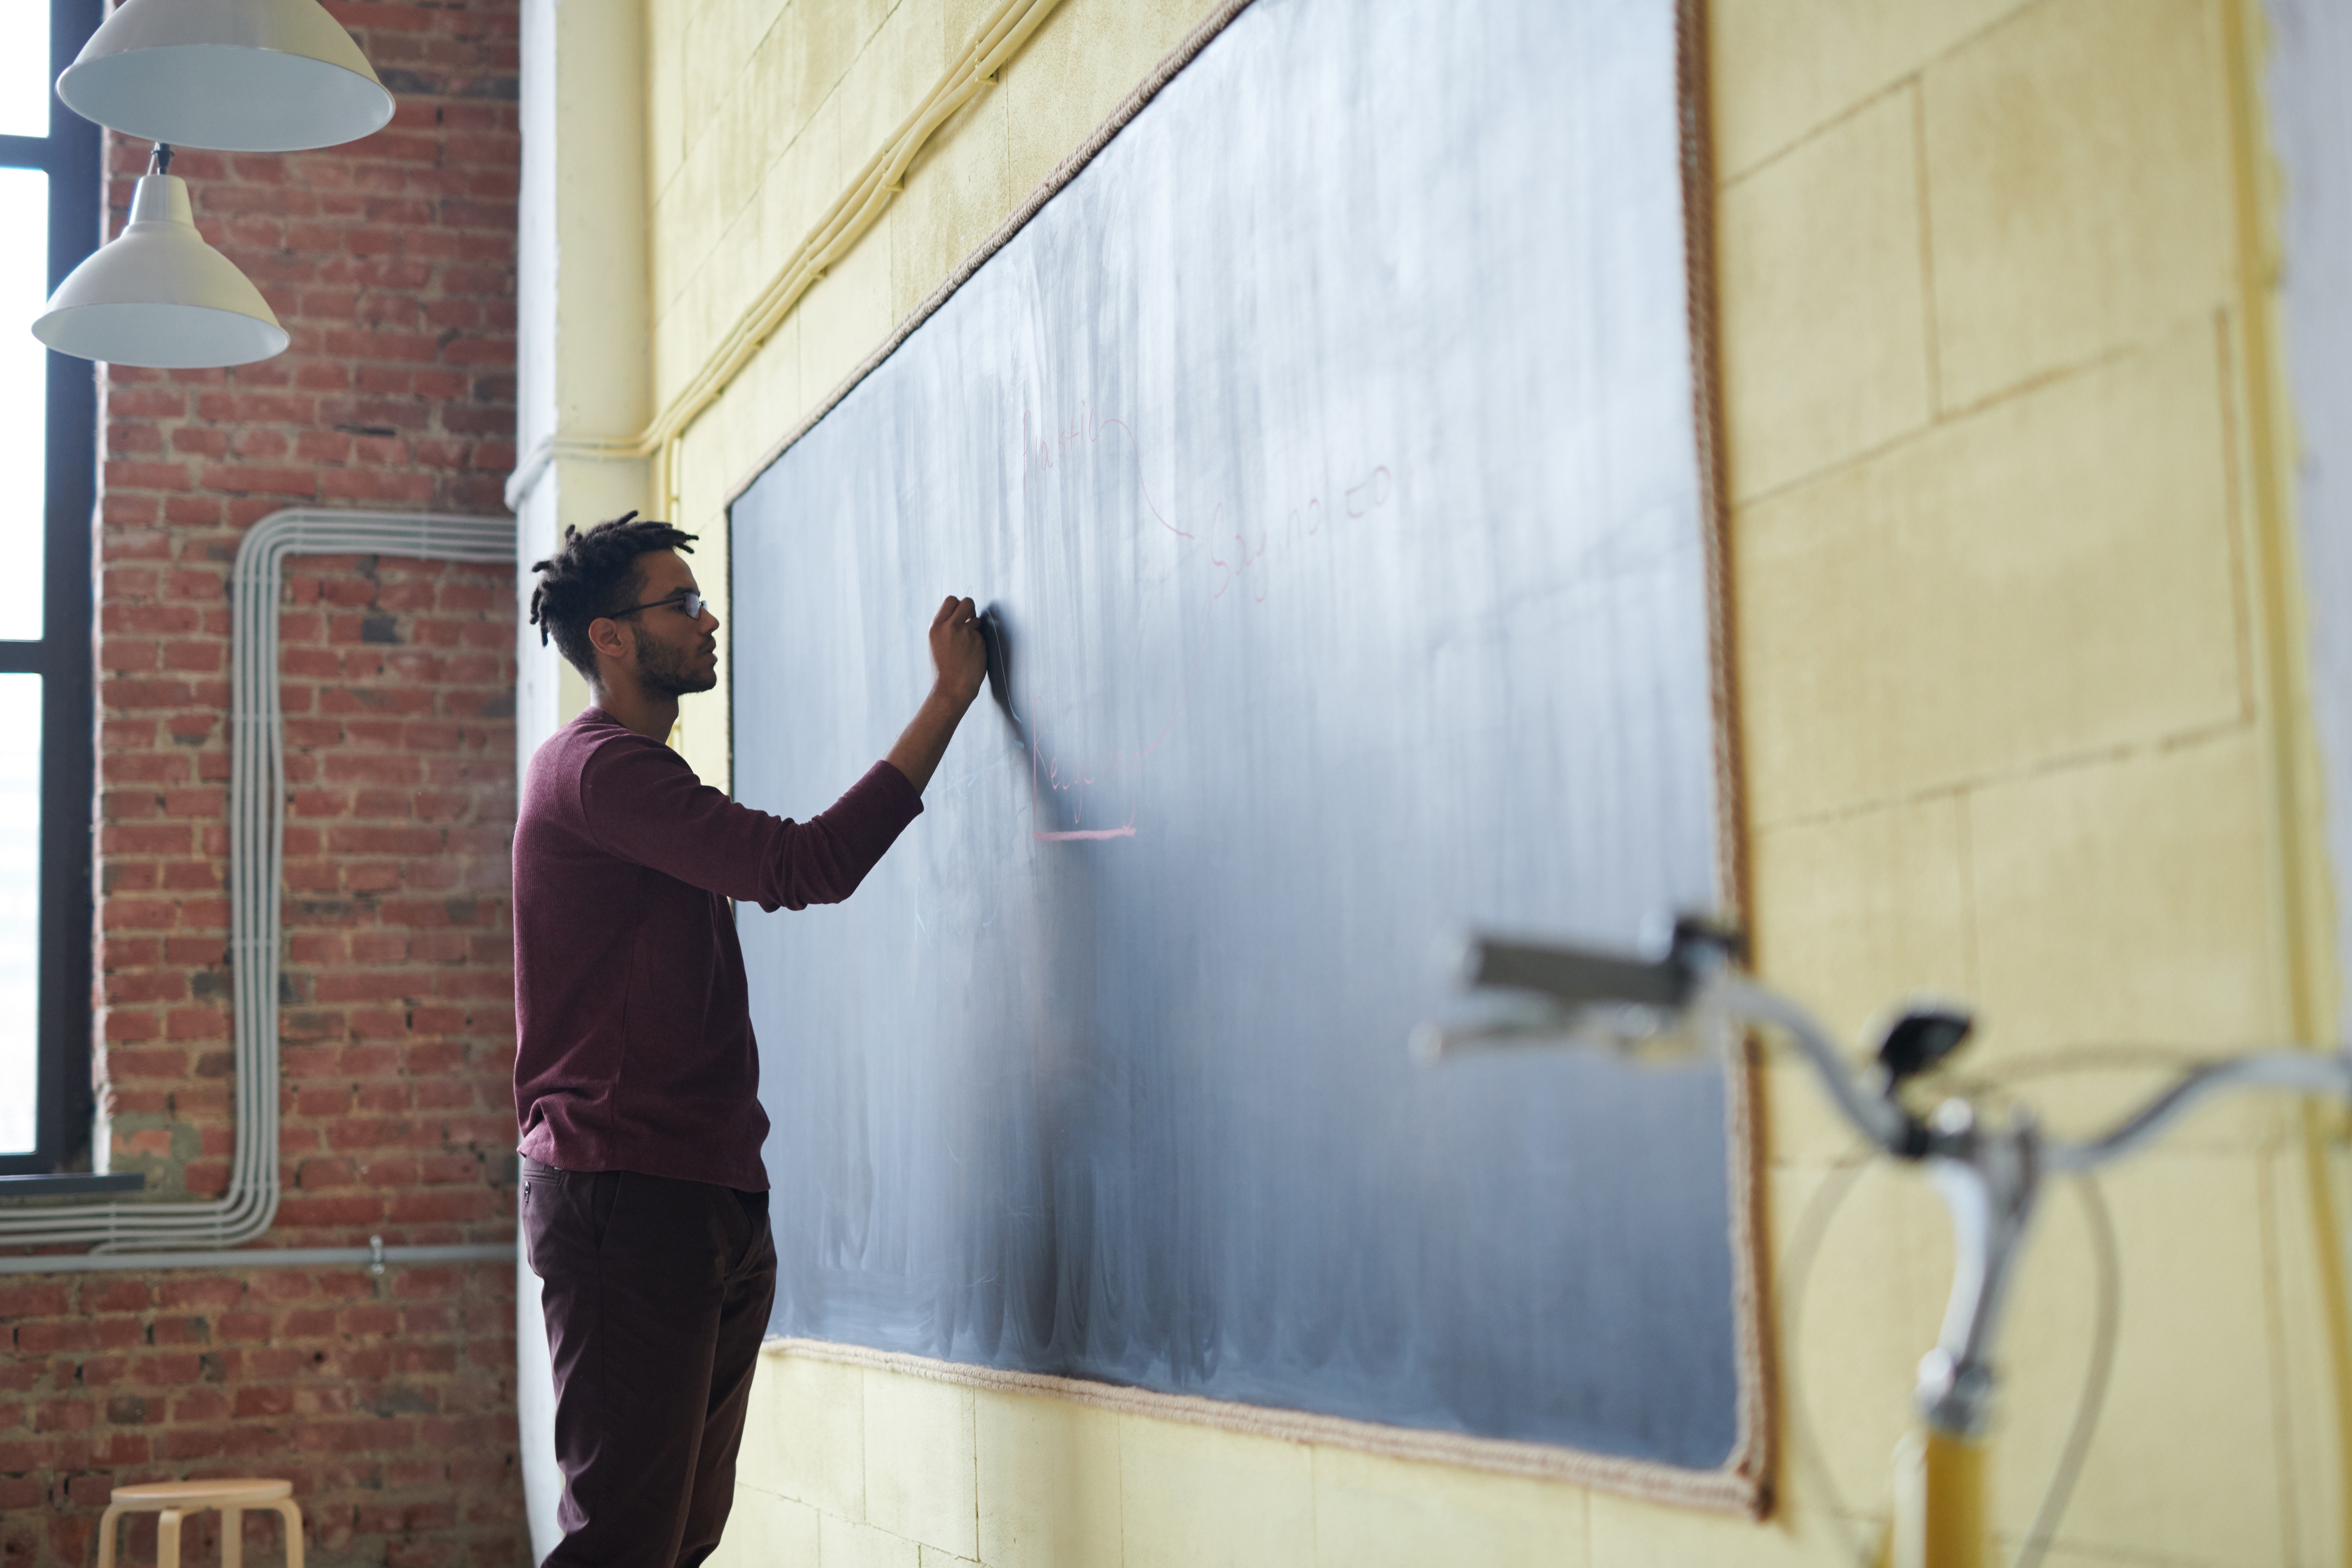 Man writing on chalkboard